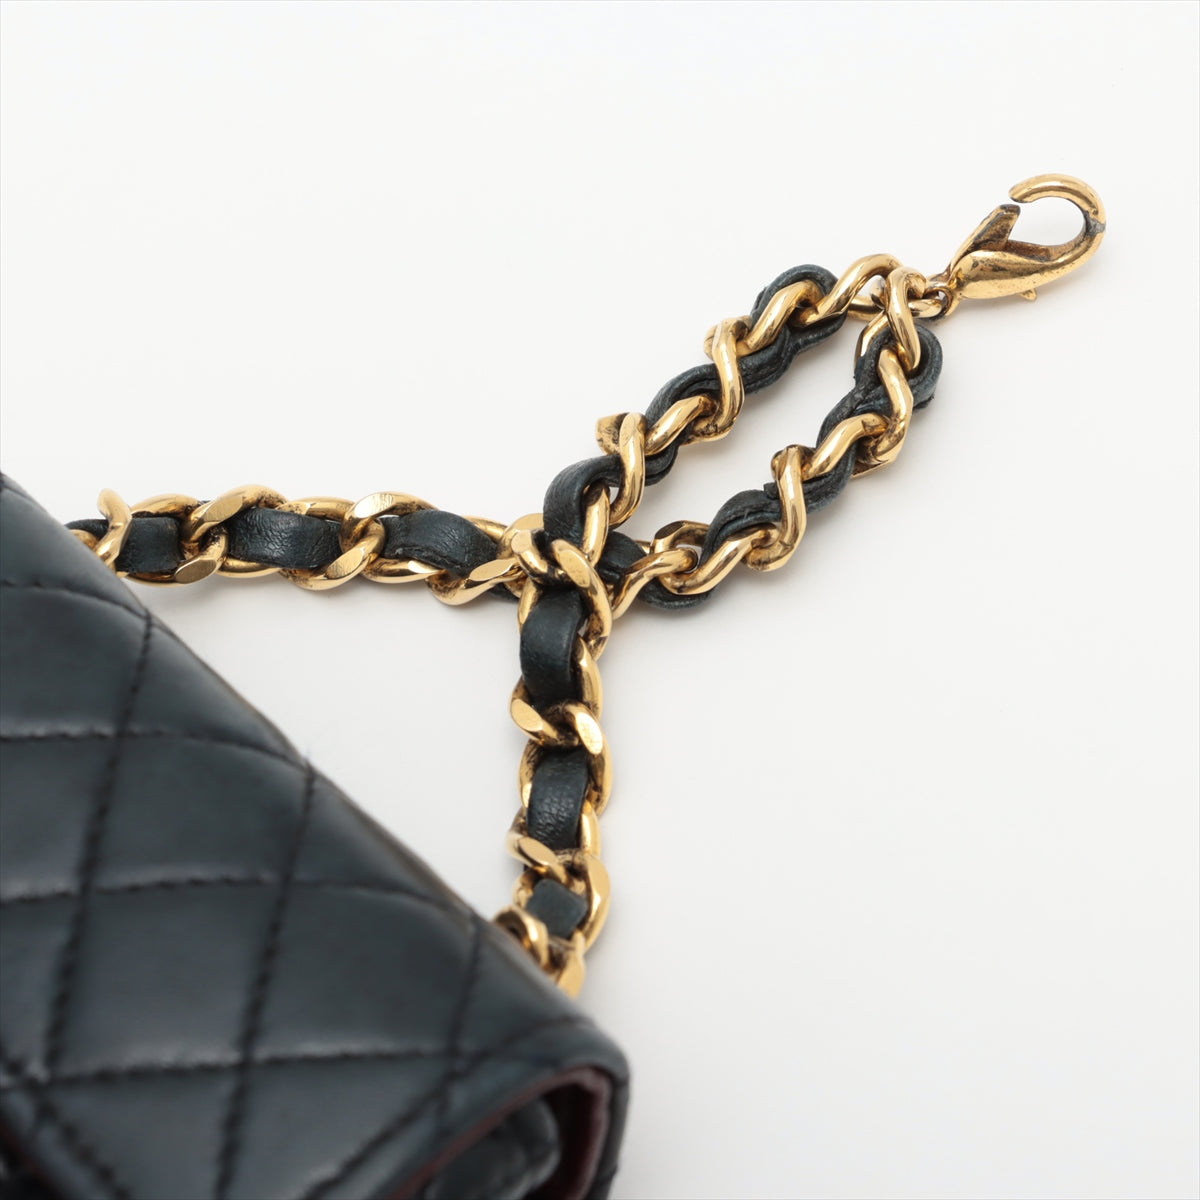 Chanel Mini Mini Matelasse Lambskin Chain bag Black Gold Metal fittings